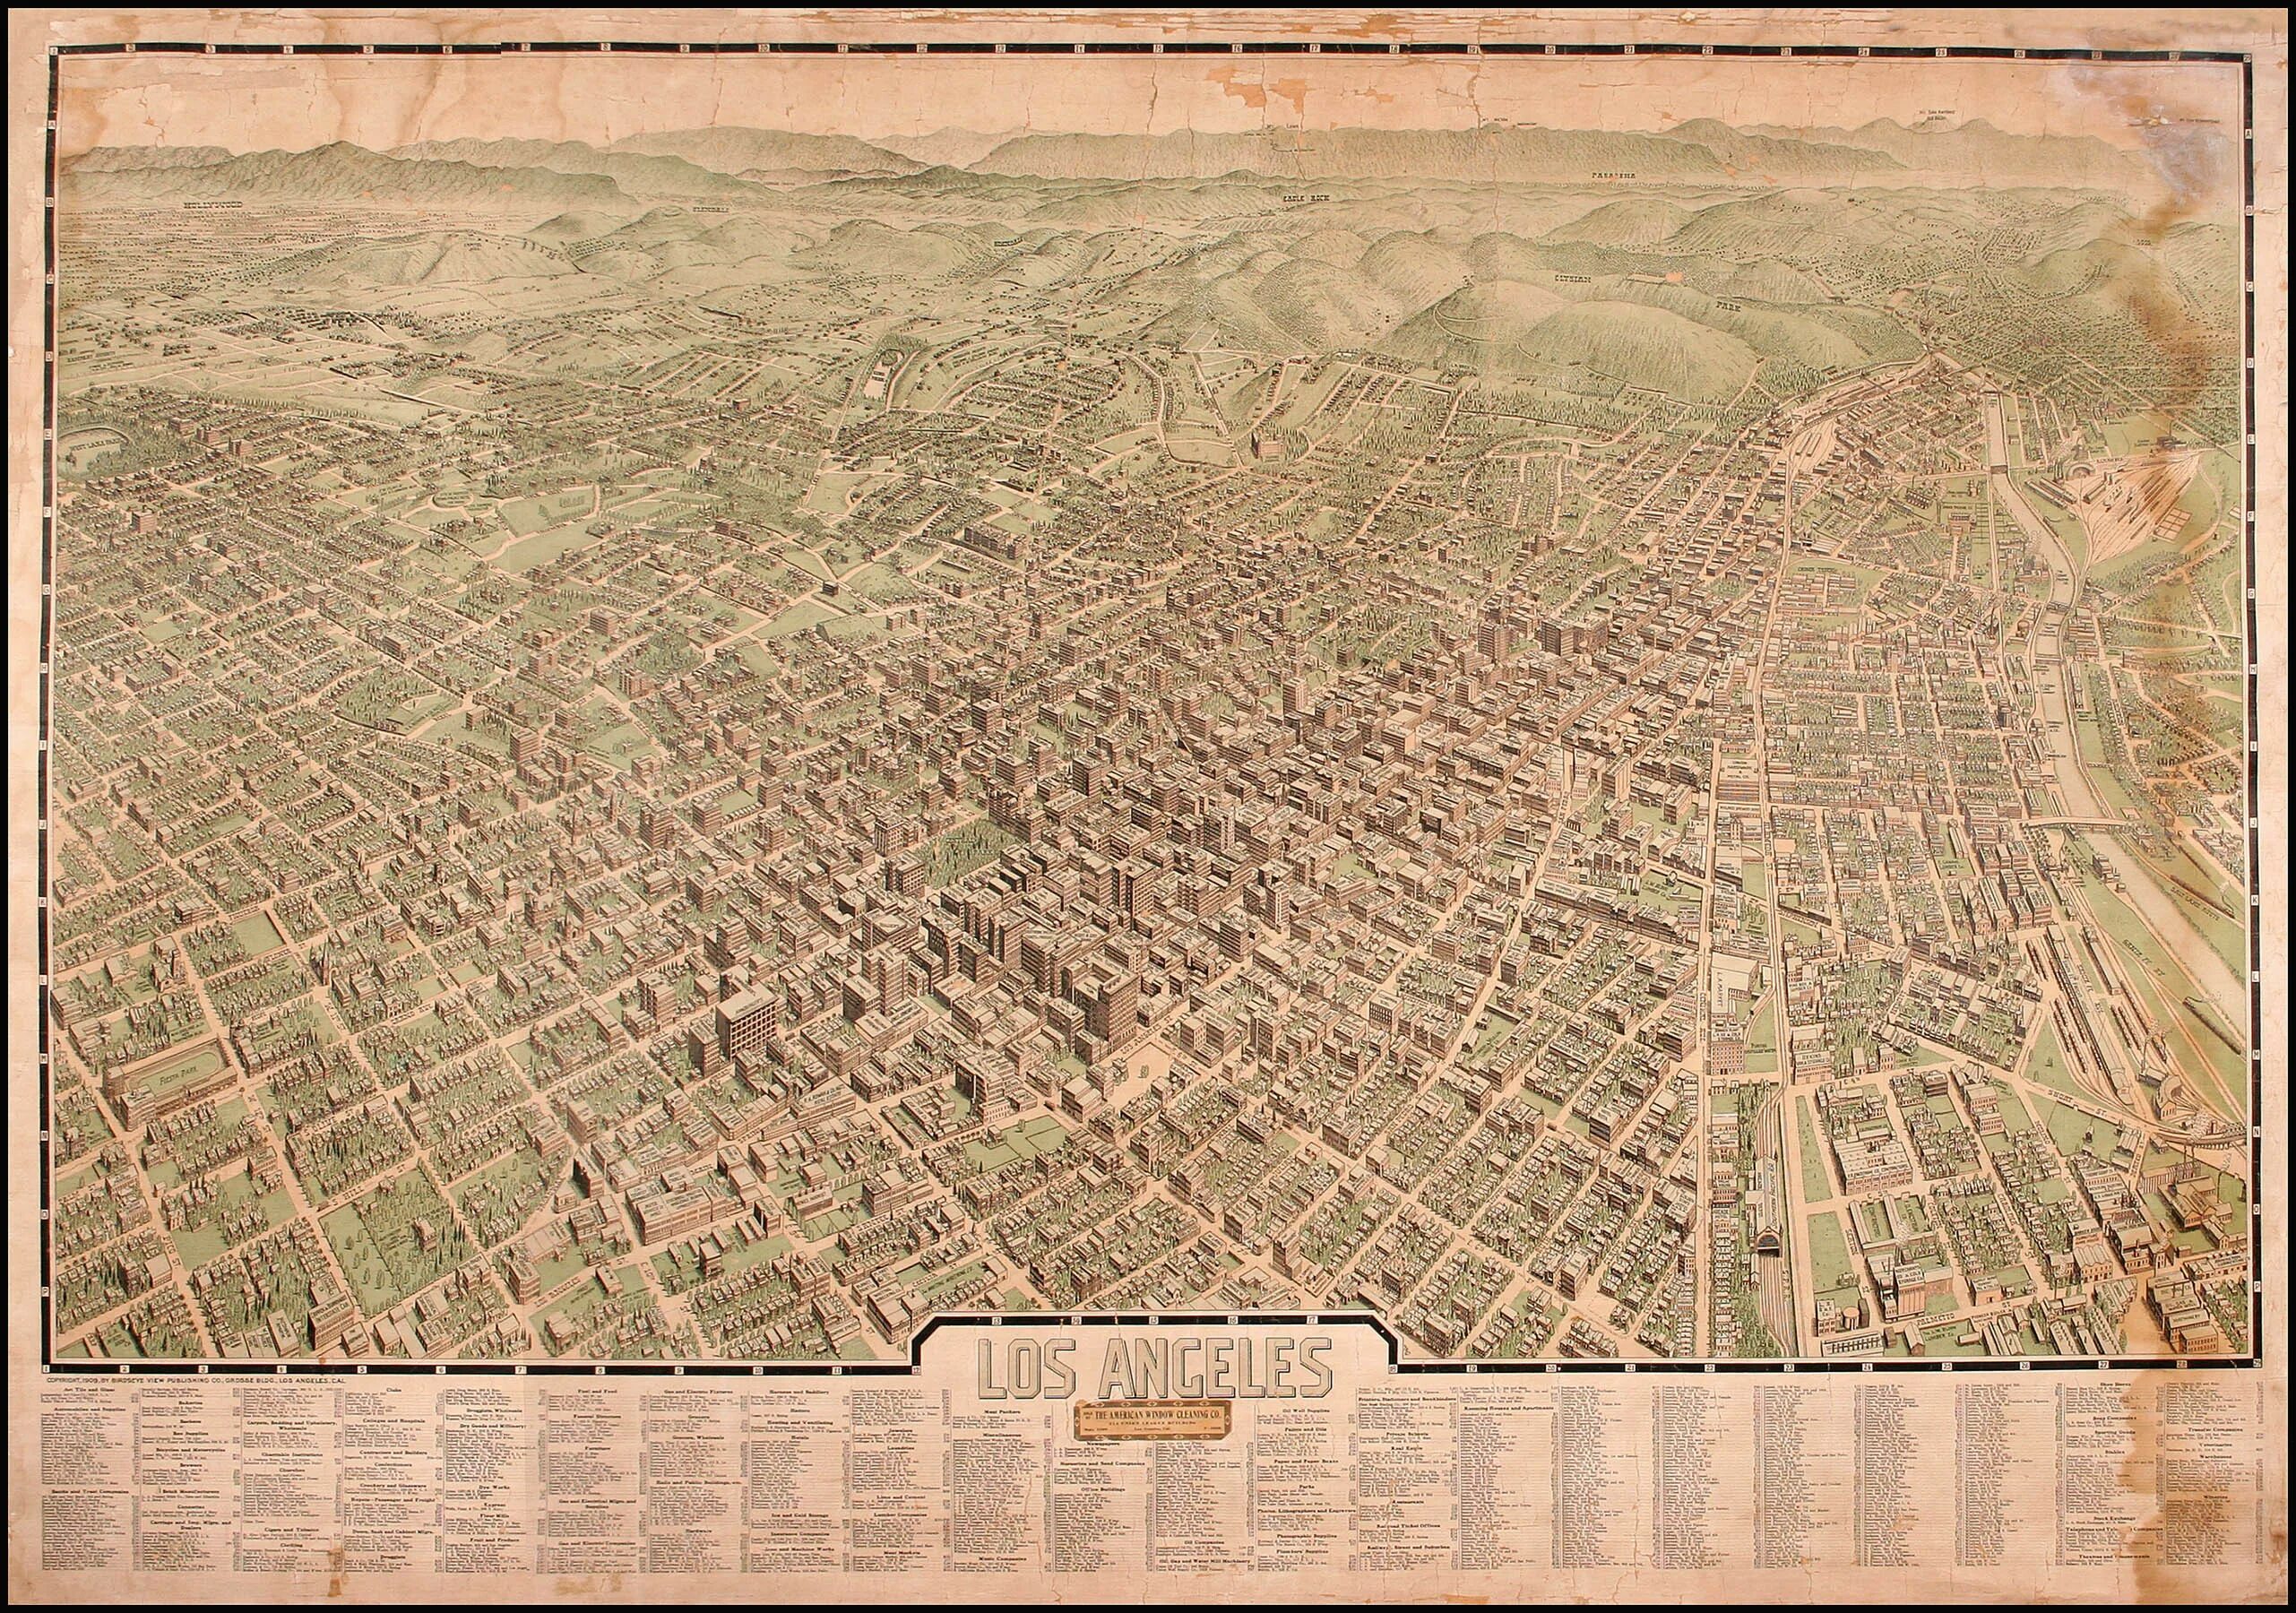 View карт. Лос Анджелес 18 век. Лос Анджелес на карте. Лос Анджелес 1900. Карта Лос Анджелеса 19 века.